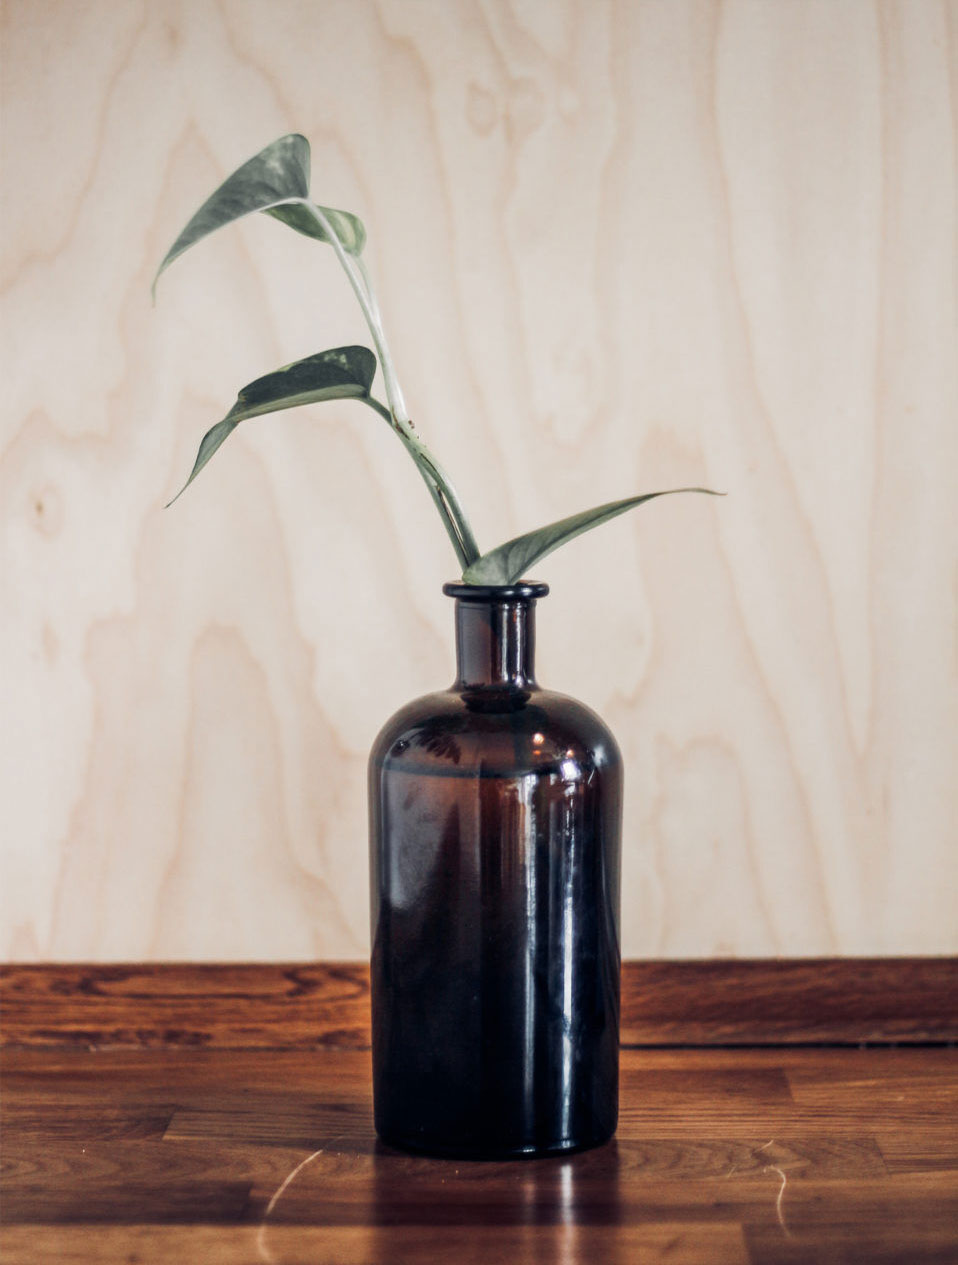 Vase Bottle Mockup on a Wooden Table FREE PSD